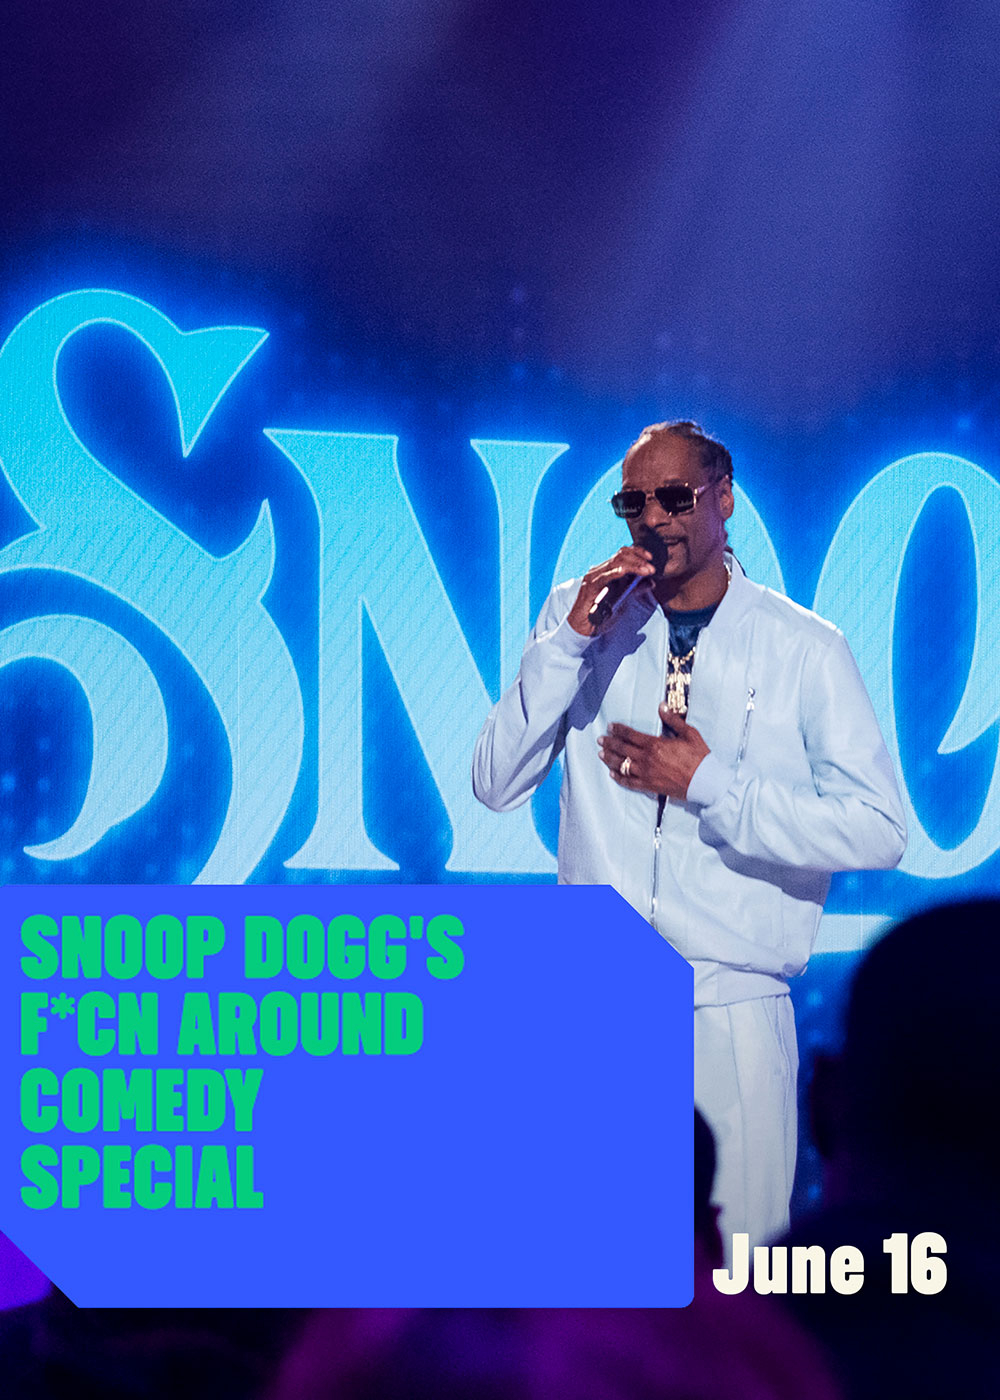 Poster Phim Snoop Dogg: Hài kịch đặc biệt (Snoop Dogg's F*cn Around Comedy Special)